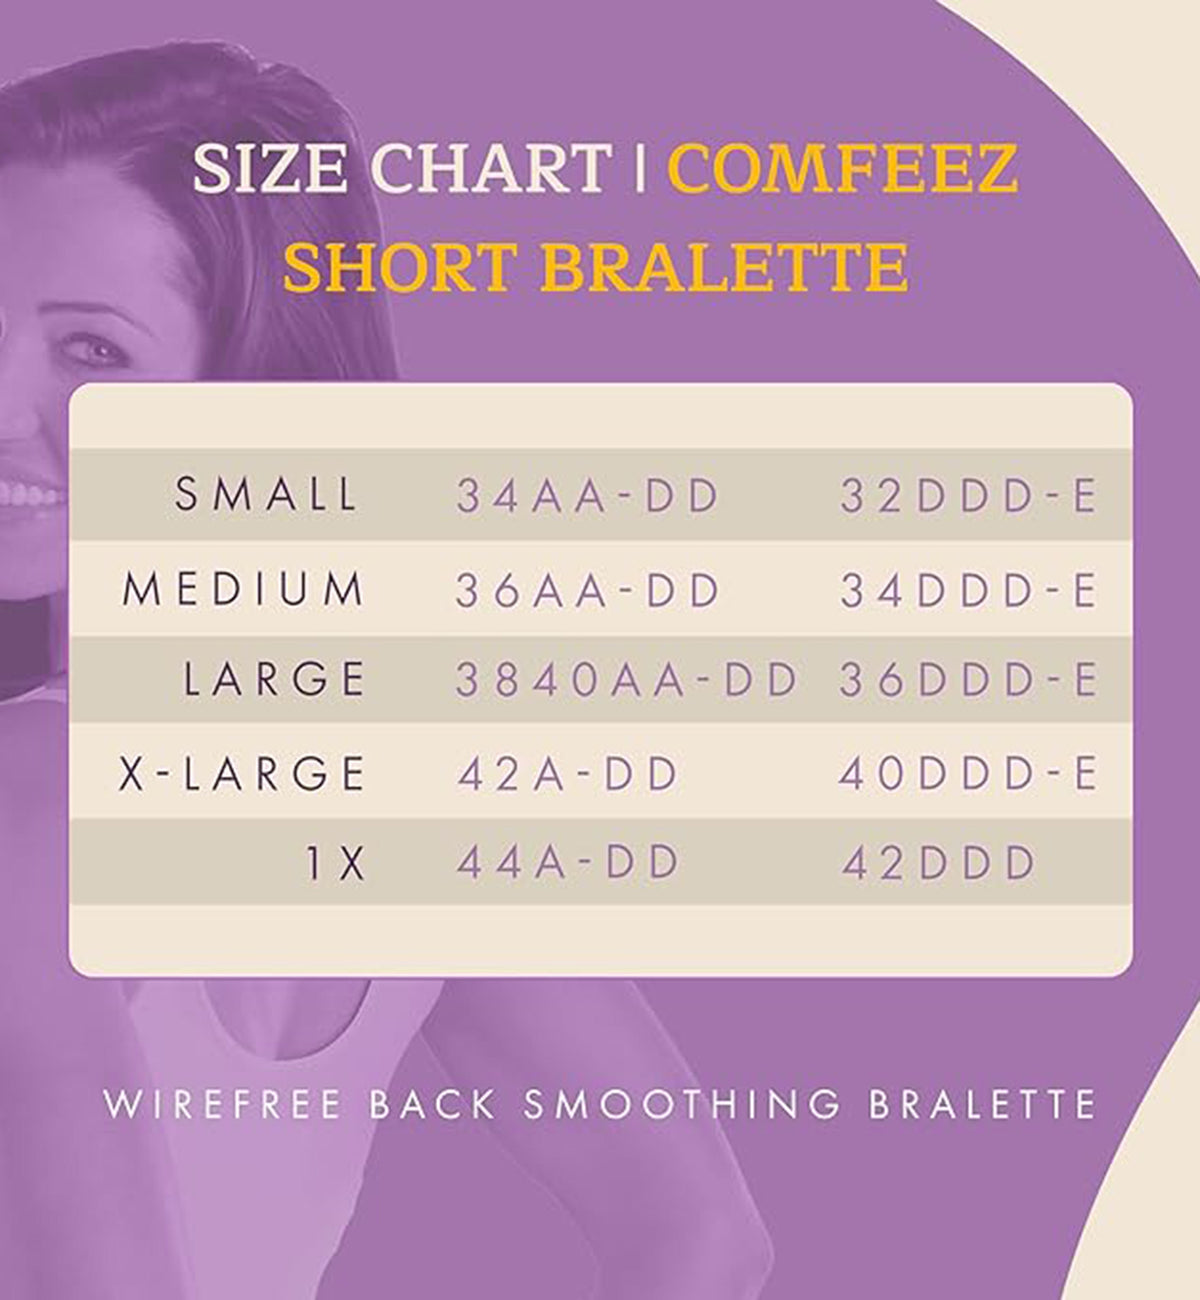 Shapeez Comfeez Short Wirefree Back Smoothing Bralette (04CZS),Small,Black - Black,Small